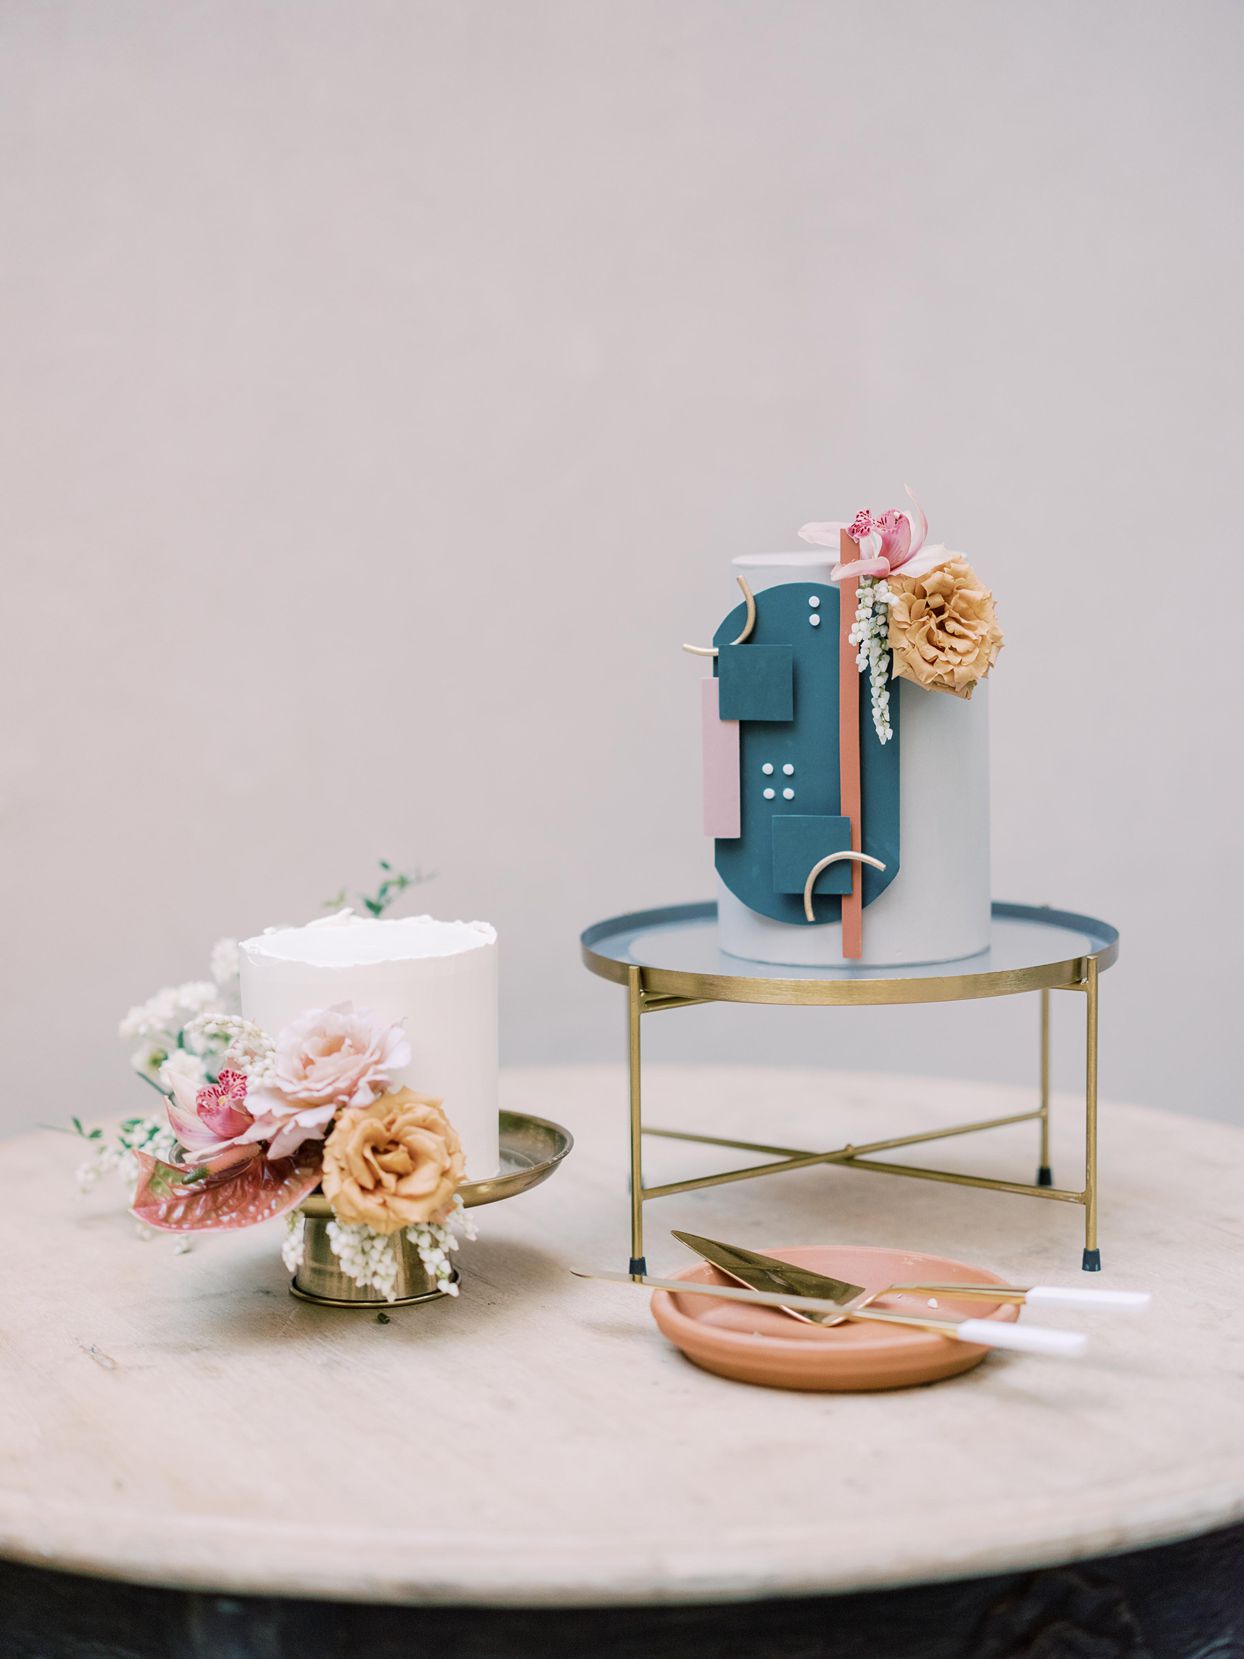 contemporary yahtzee-inspired wedding cake embellished with flowers